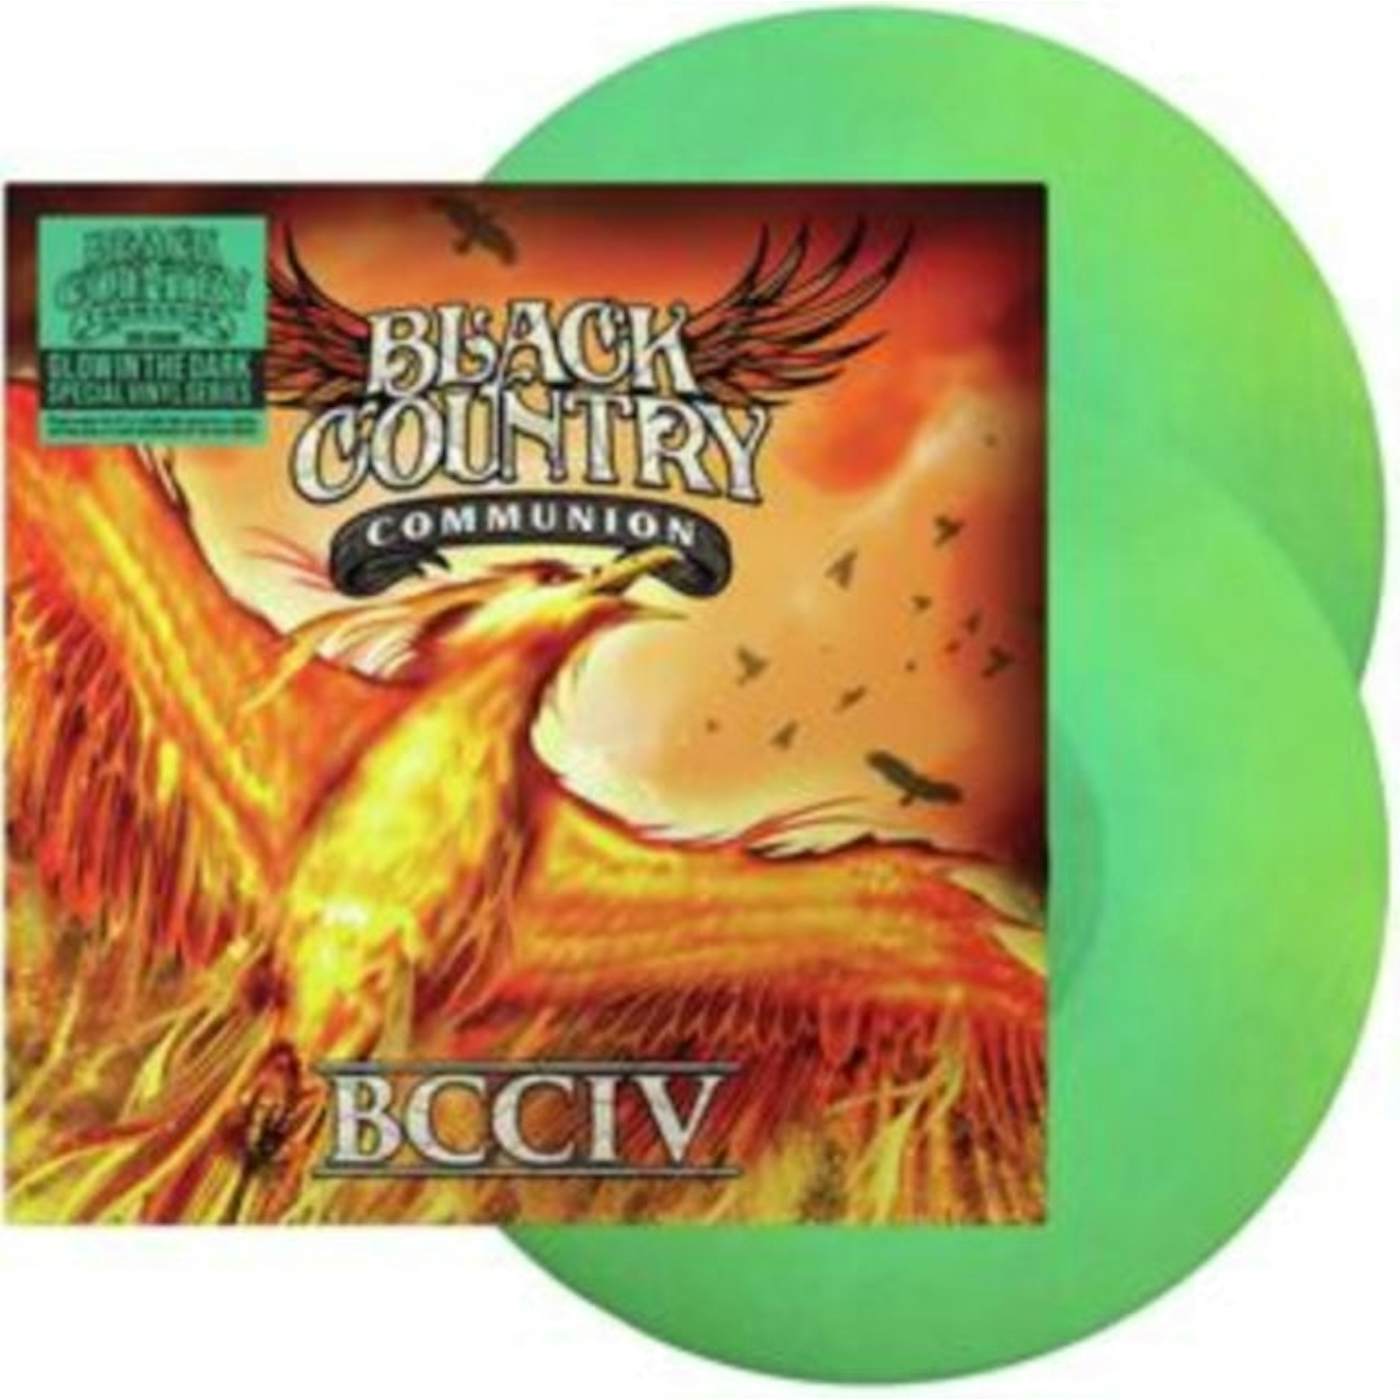 Black Country Communion LP Vinyl Record - Bcciv (Glow In The Dark Vinyl)